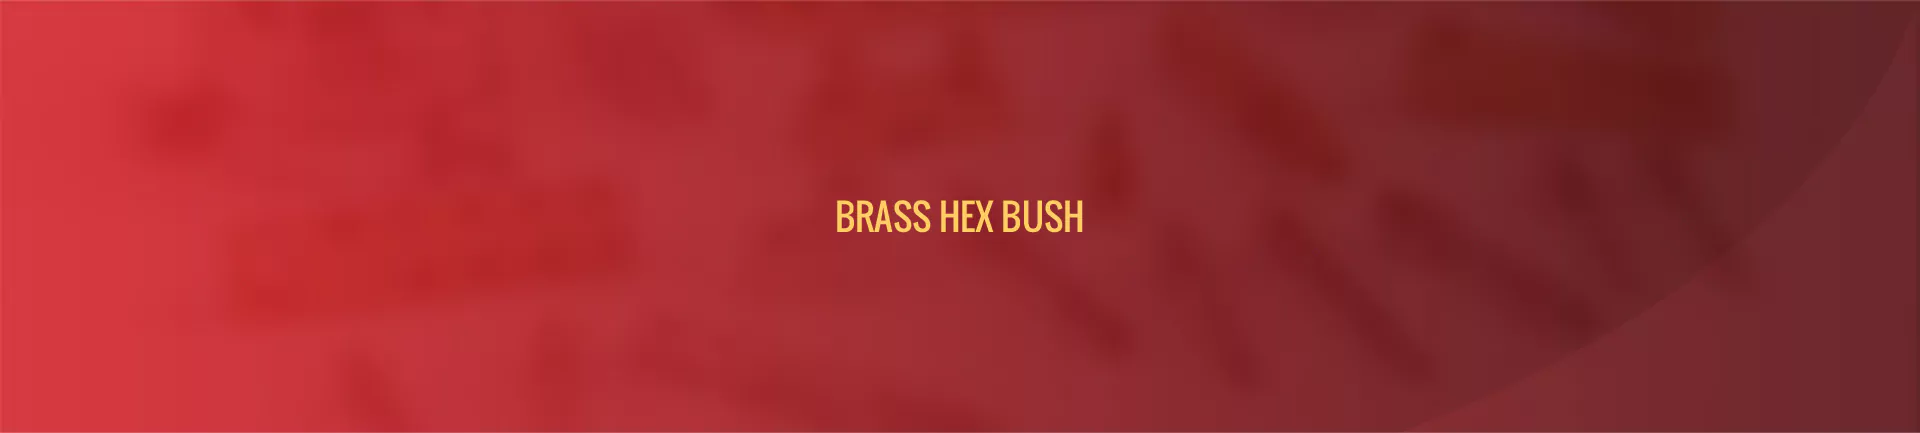 brass_hex_bush-banner